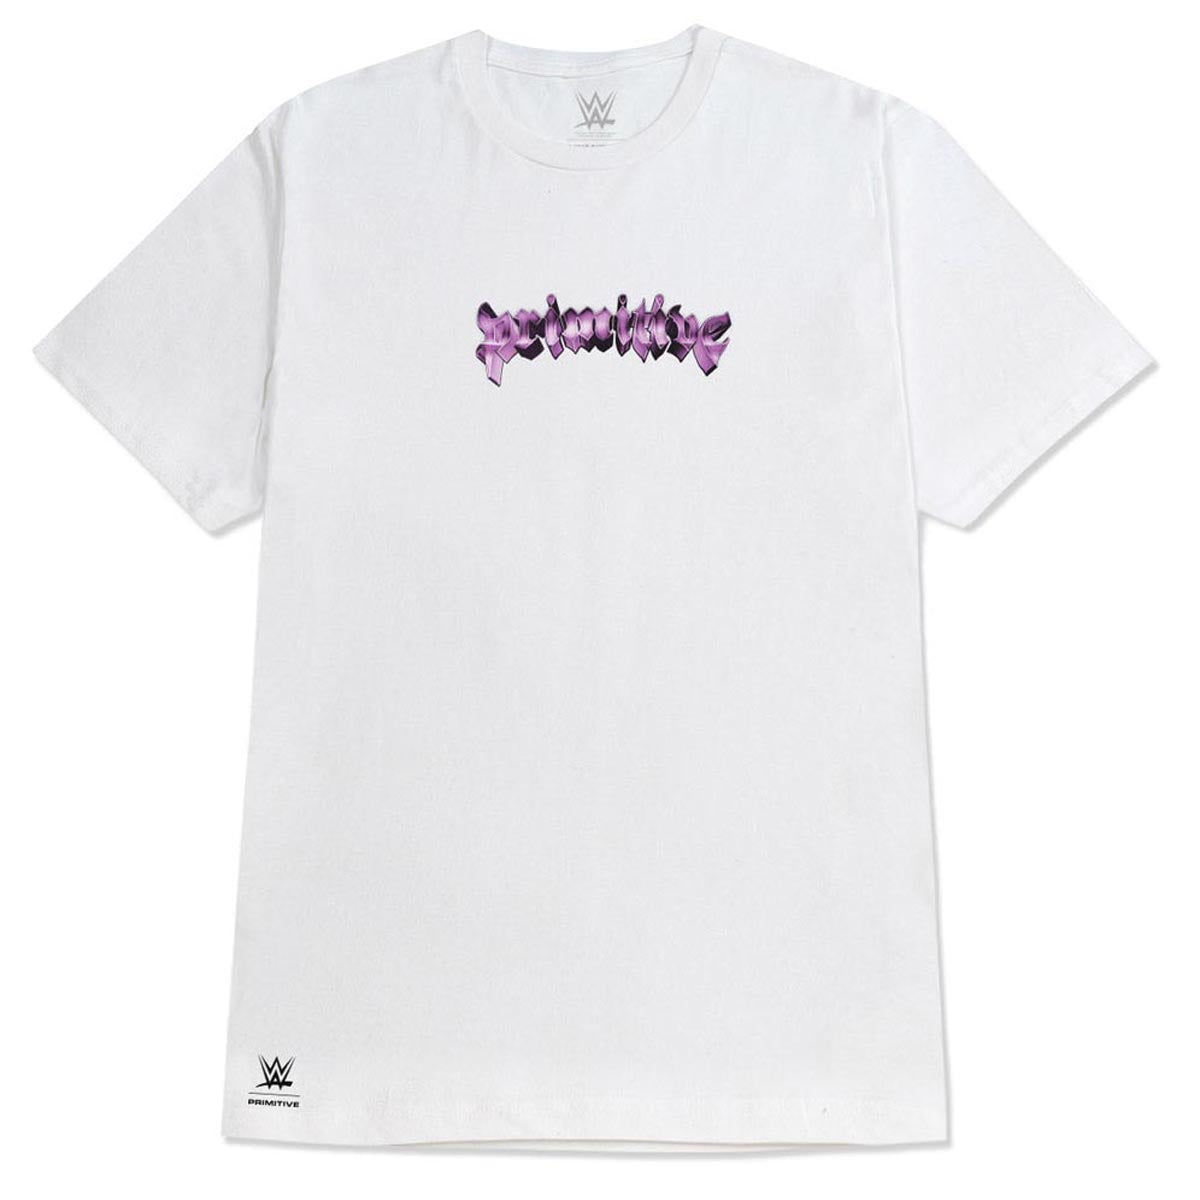 Primitive x WWE Deadman Forever T-Shirt - White image 2